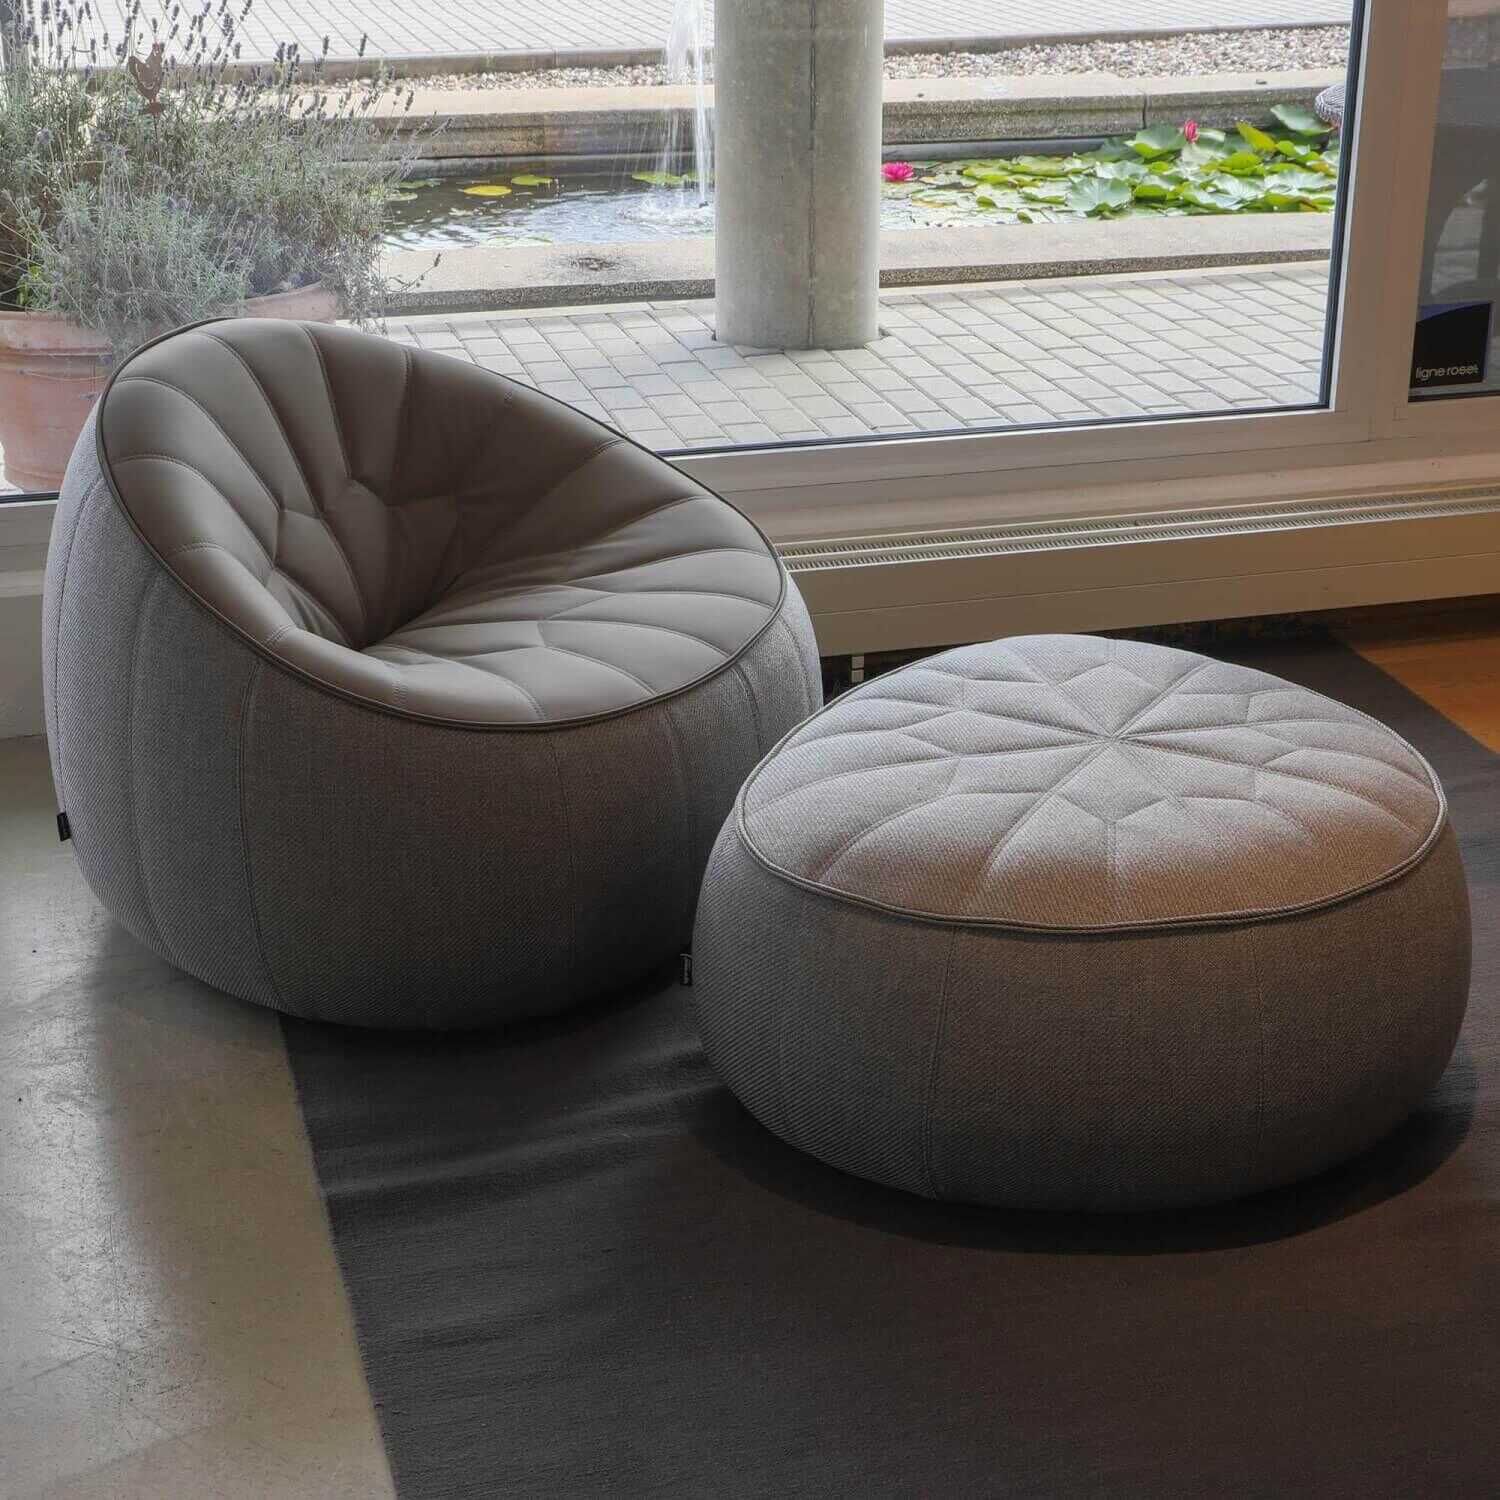 Outdoor-Sessel mit Ottomane Stoff Souris Top Grau inkl. Schutzhüllen